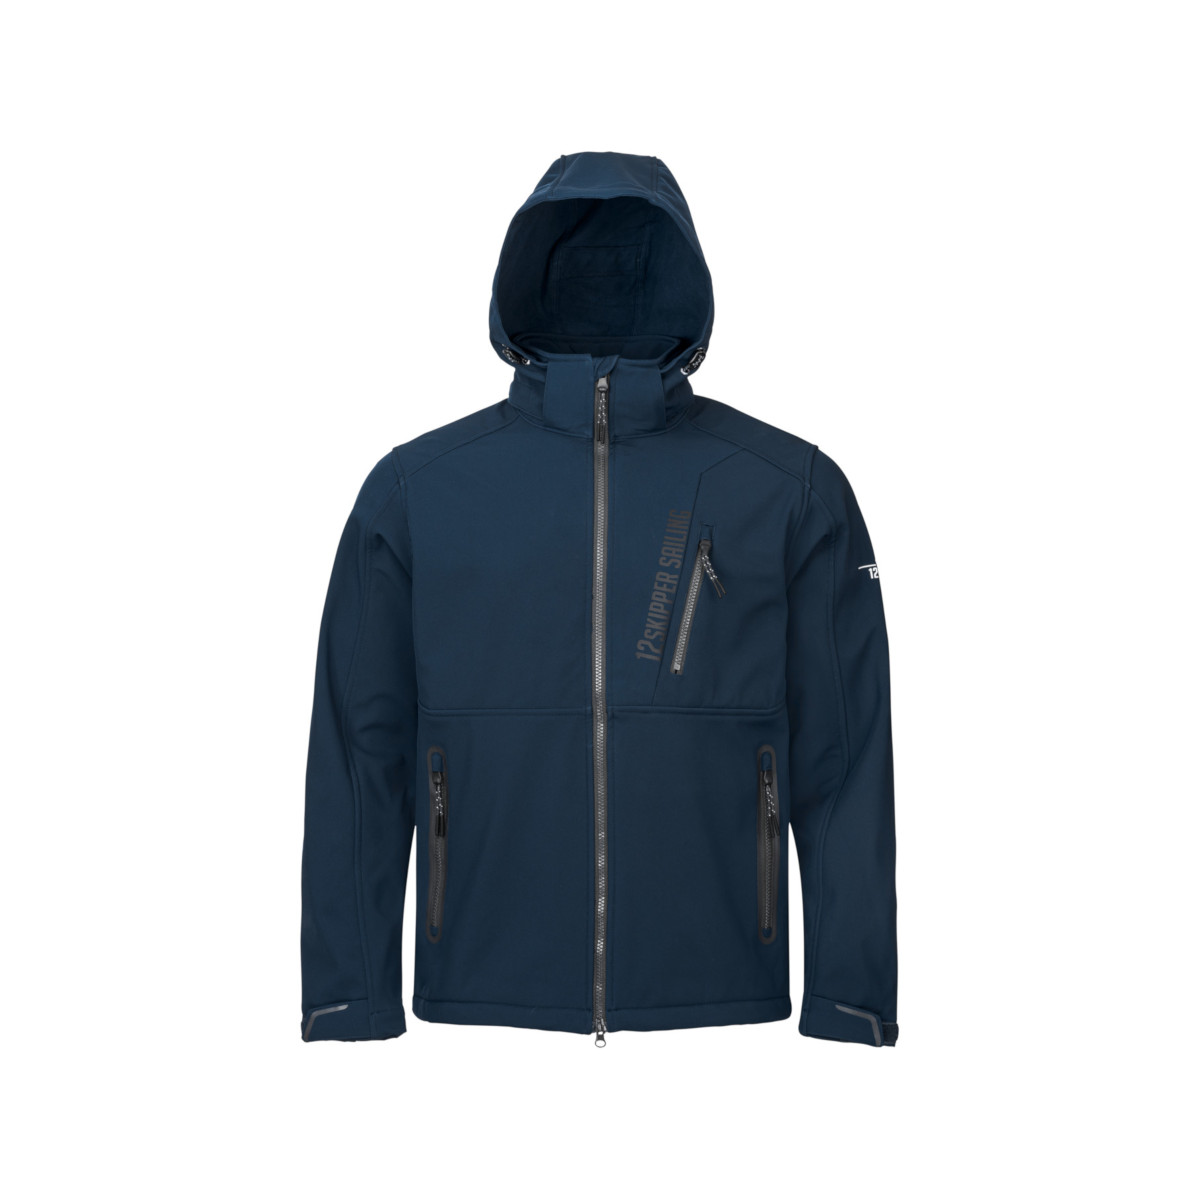 12skipper Amundsen veste softshell unisexe - bleu marine, taille XXL